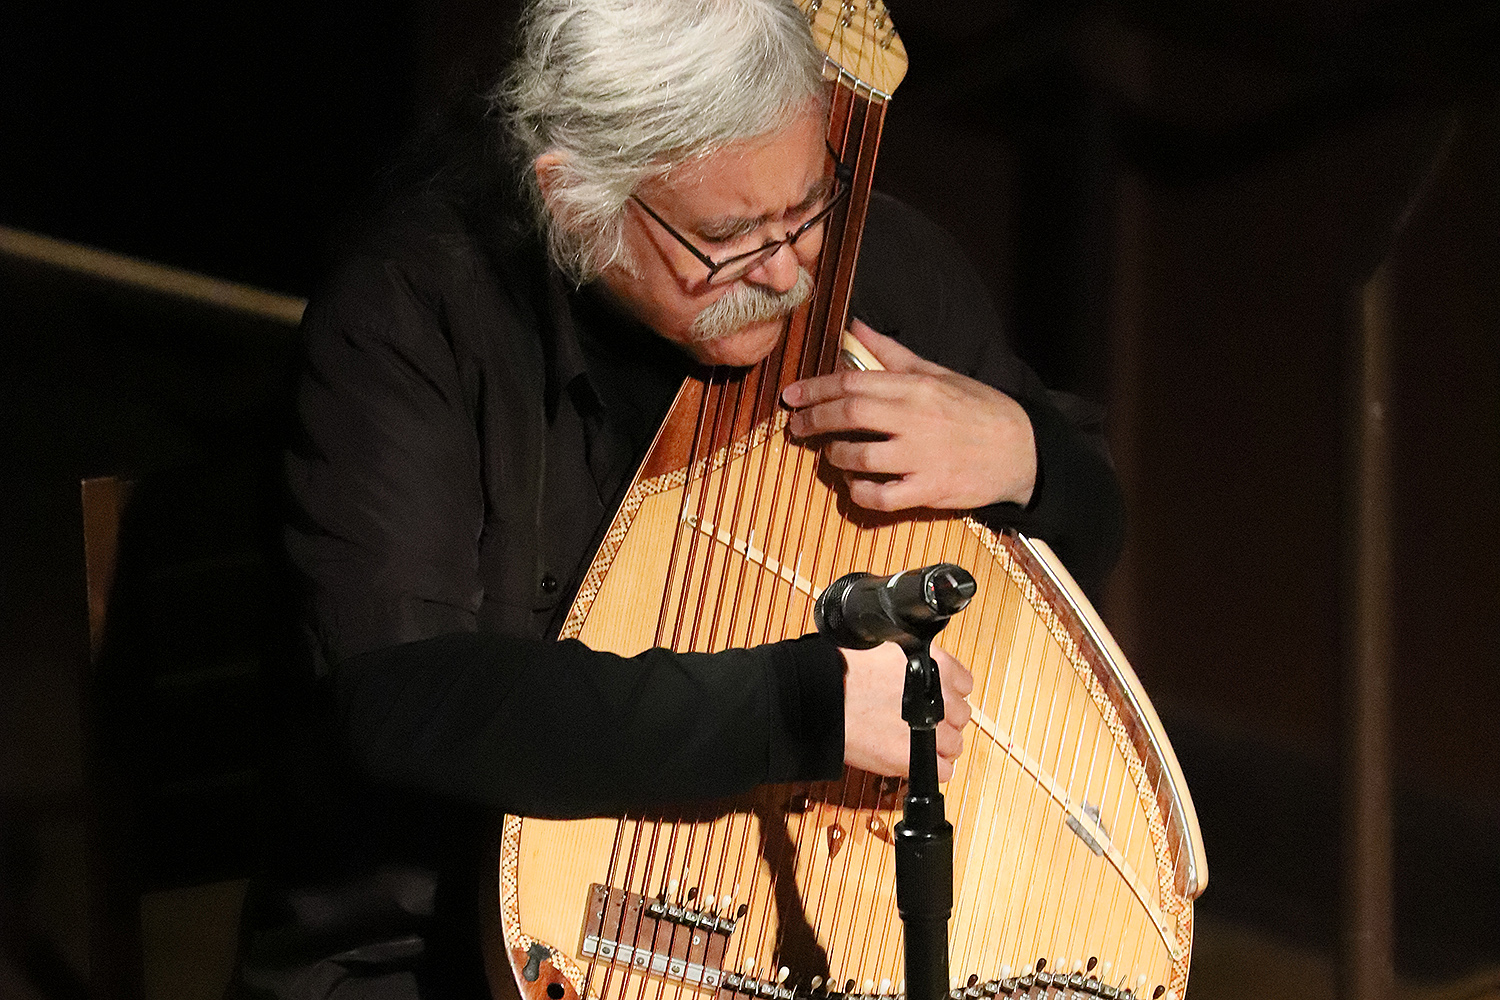 Composer Julian Kytasty, a Ukrainian descendant, performed on a Ukranian, string instrument known as a bandura.